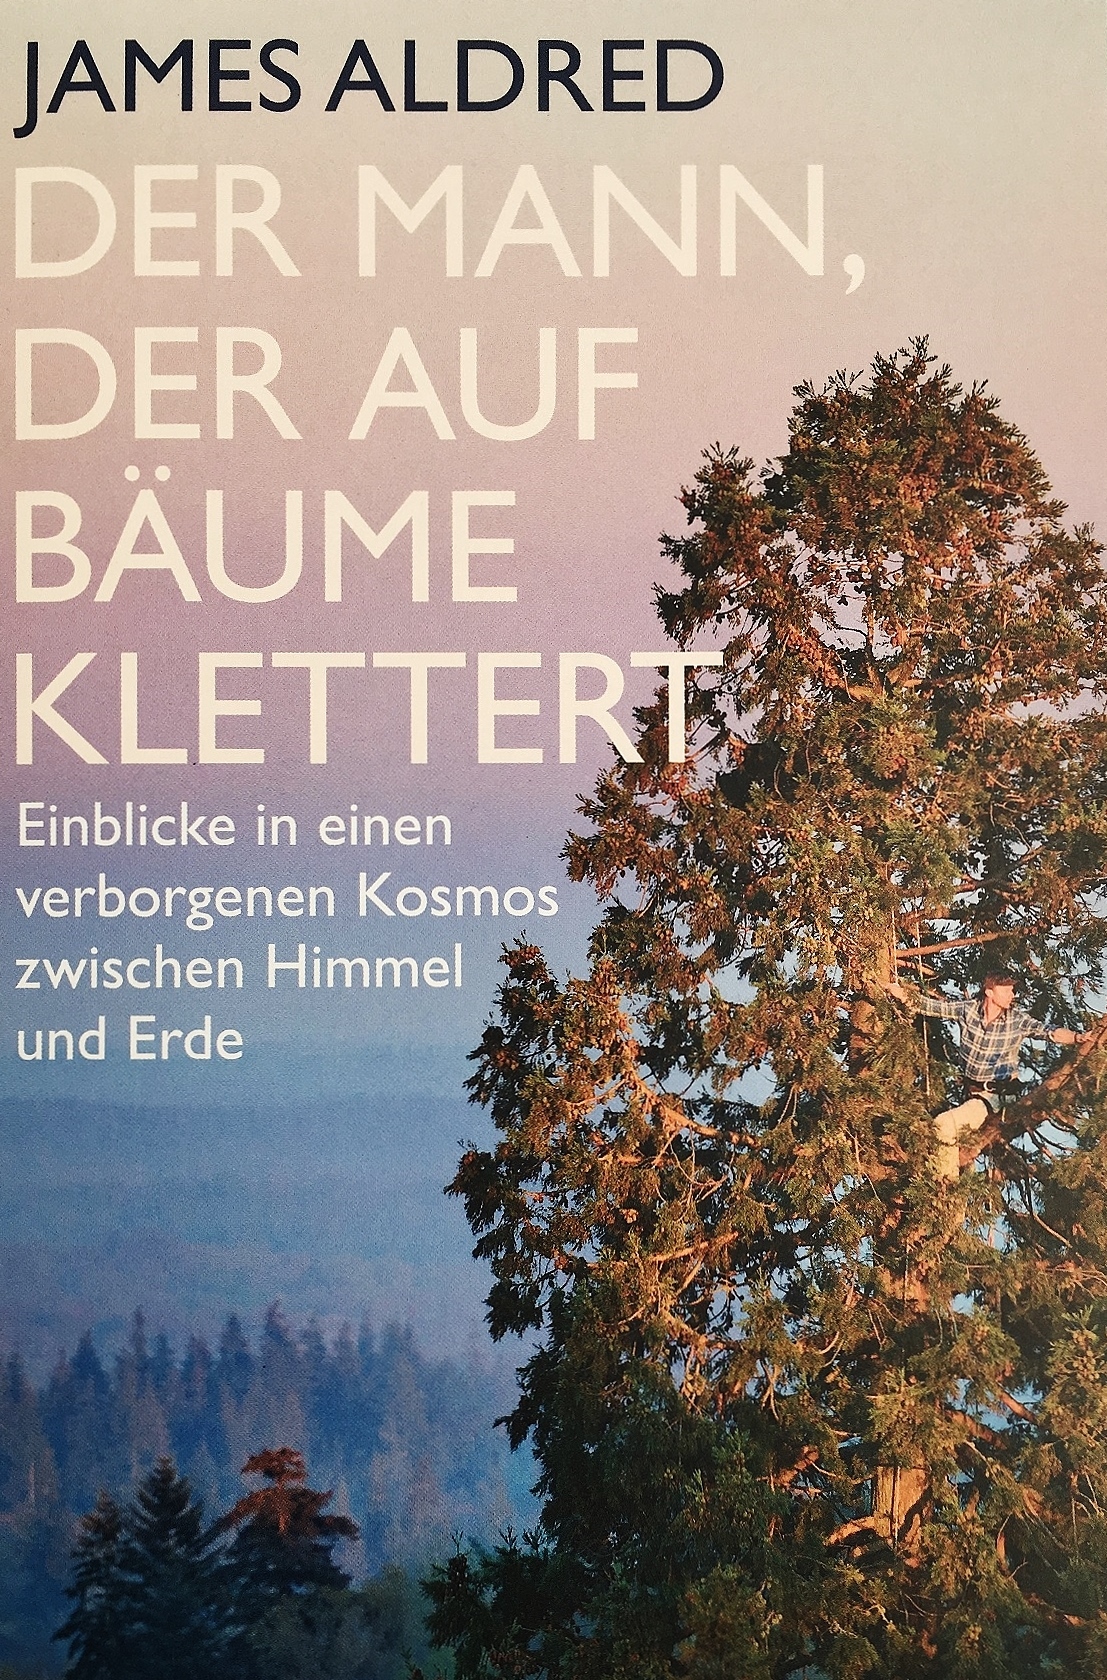 German edition